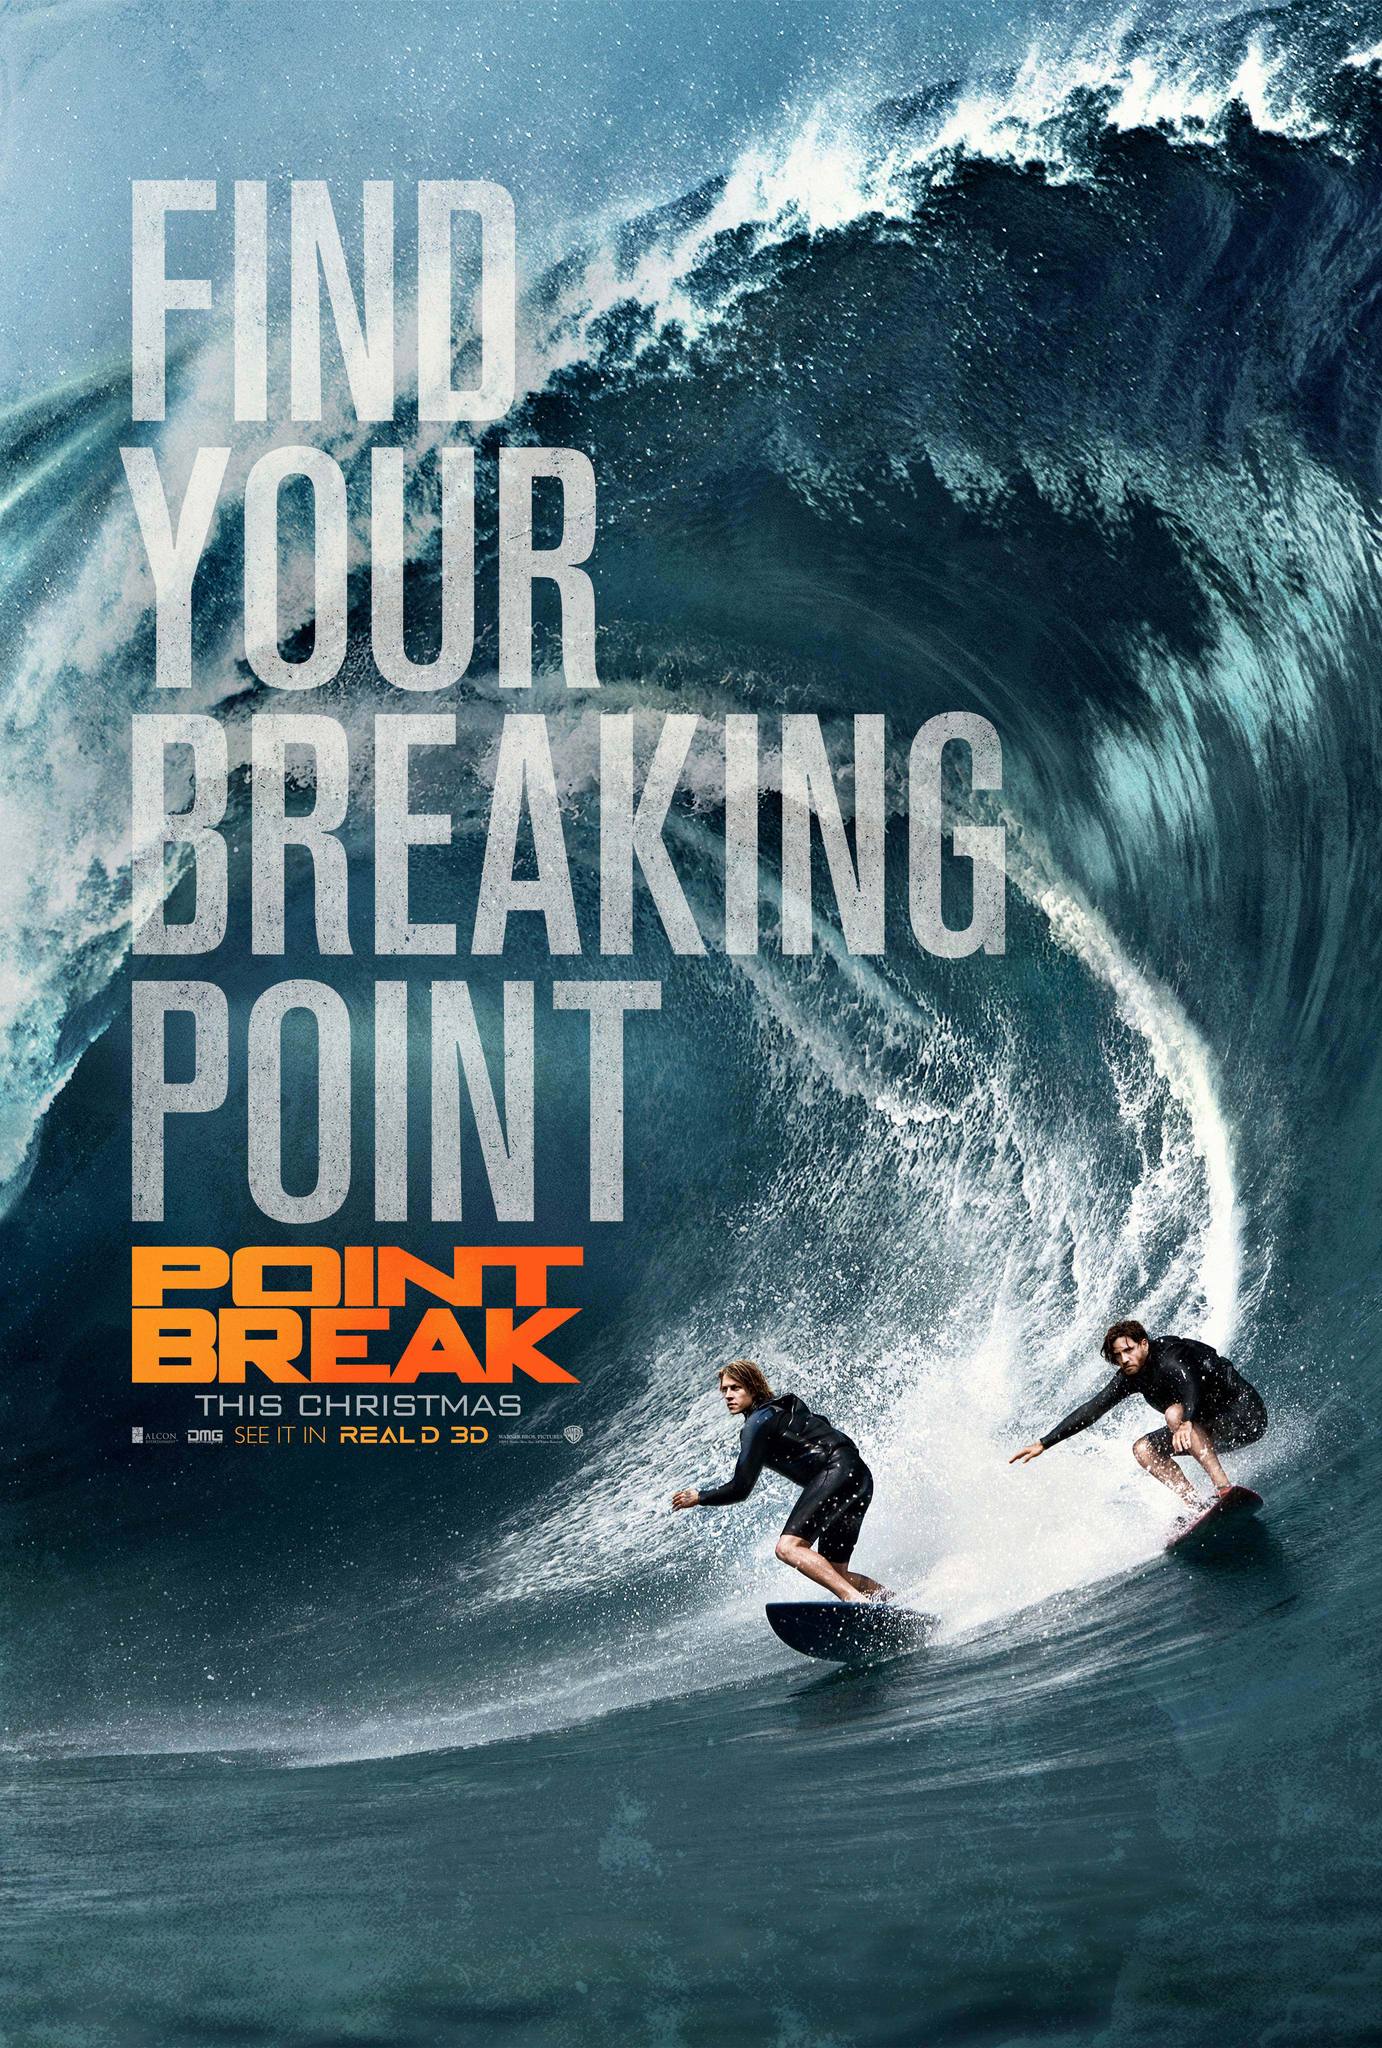 Ferdi showcased his incredible skills as the stunt double for Luke Bracey in the adrenaline-packed film 'Point Break'.